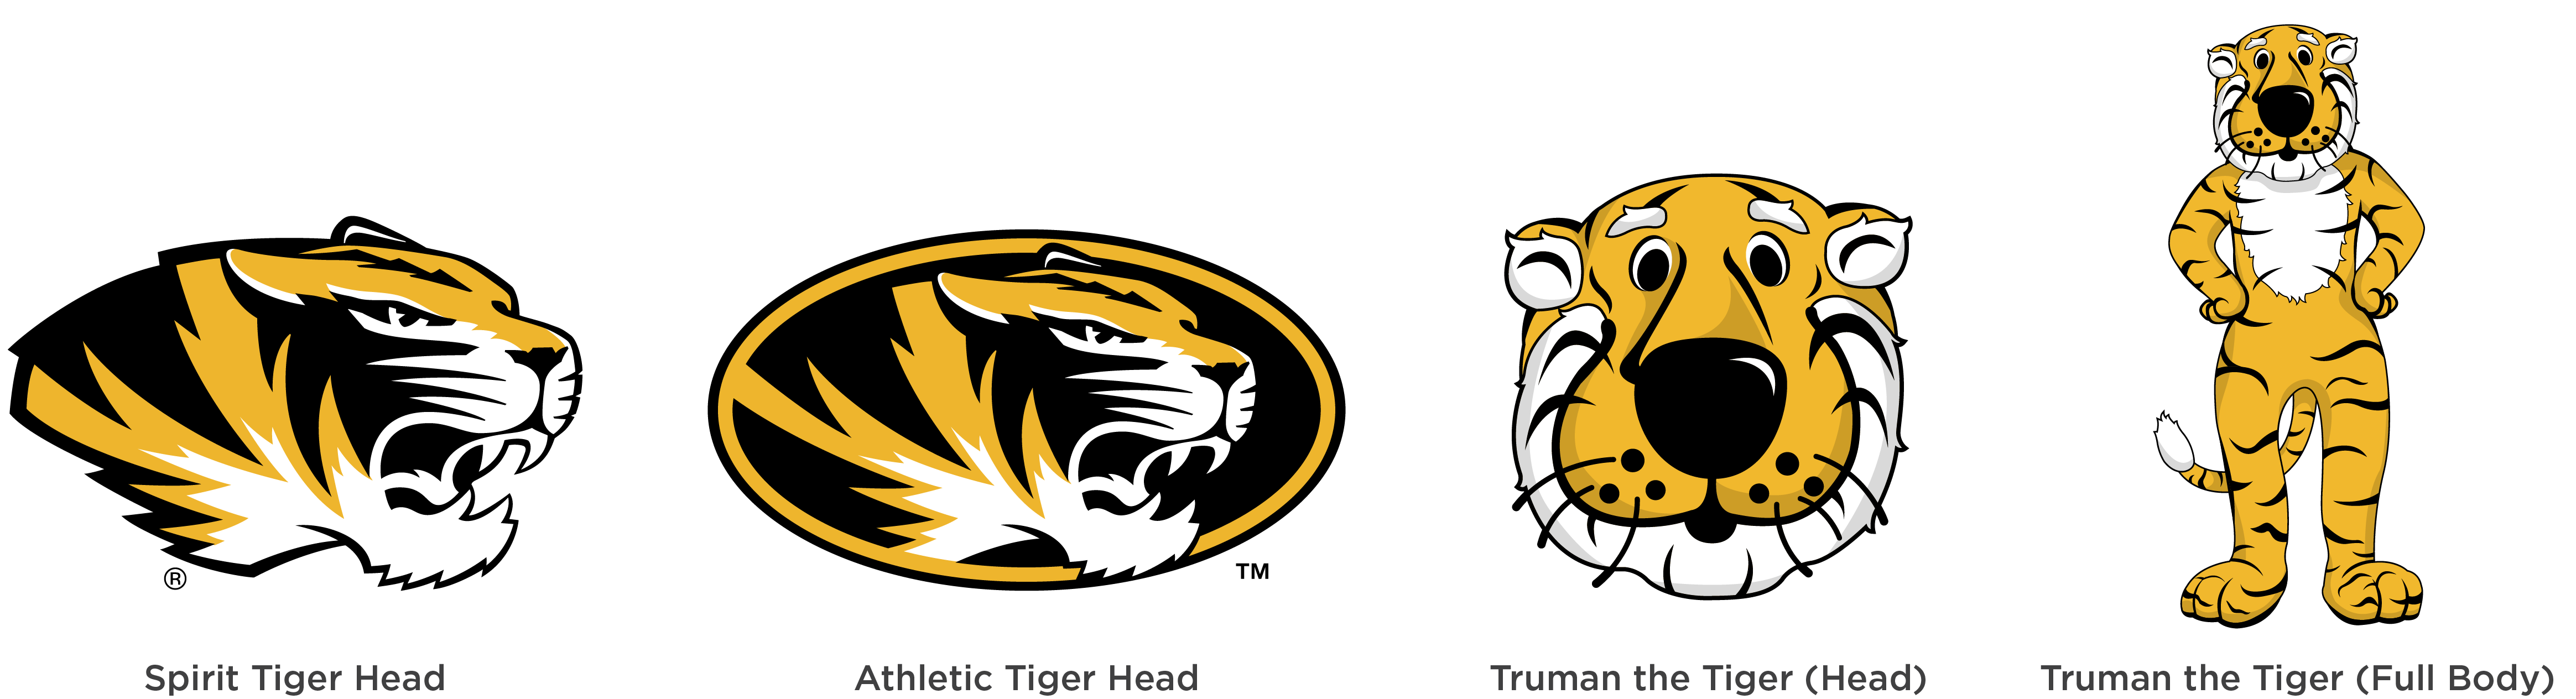 University of Missouri marks: Athletic Mark, Spirit Tiger Head, Truman the Tiger head, Truman the Tiger full body